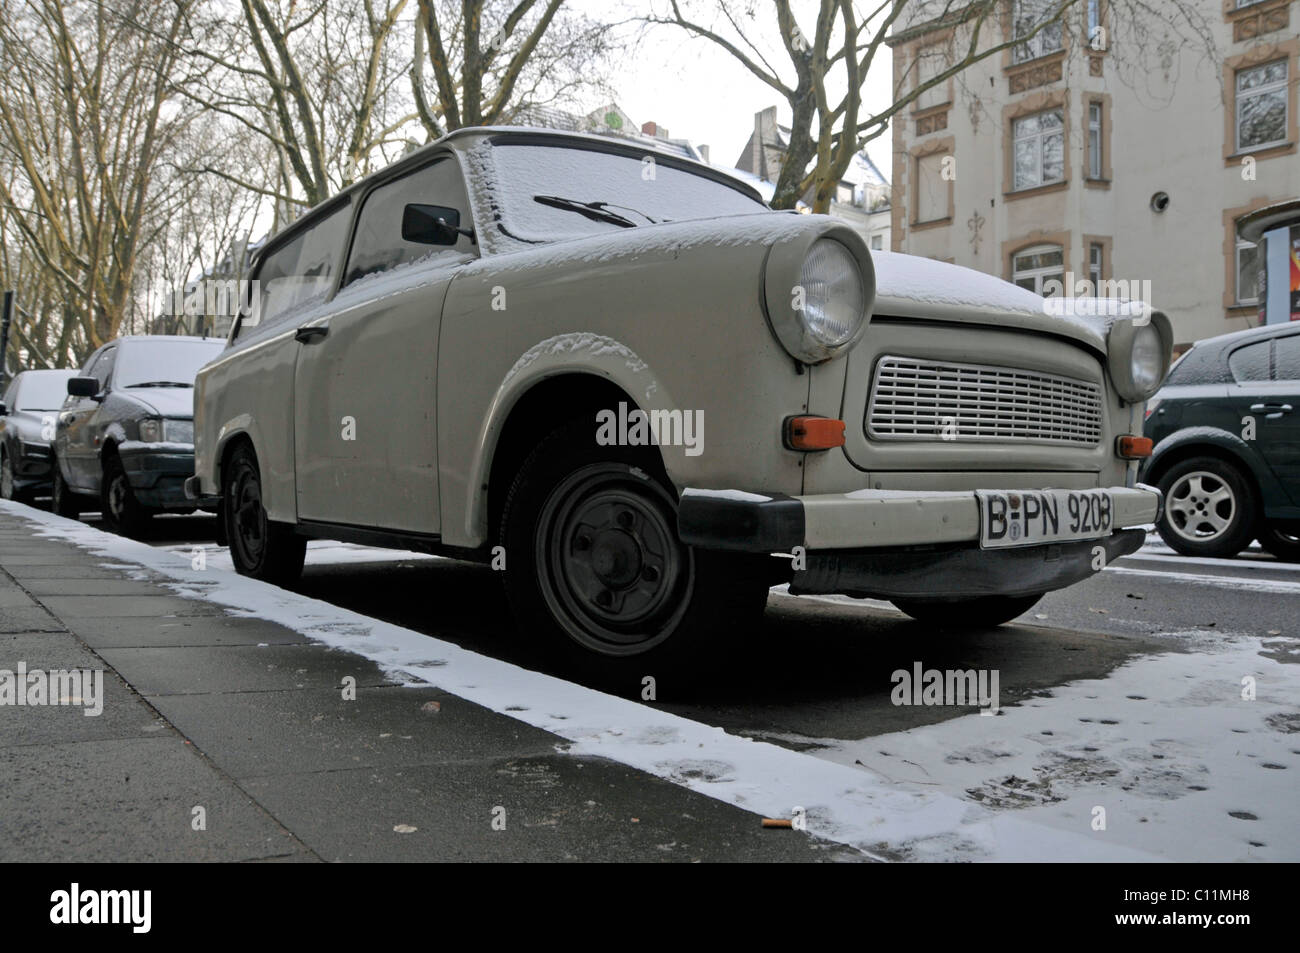 Parked snowy Trabi vintage car, Trabbi, Trabant, Germany, Europe Stock Photo